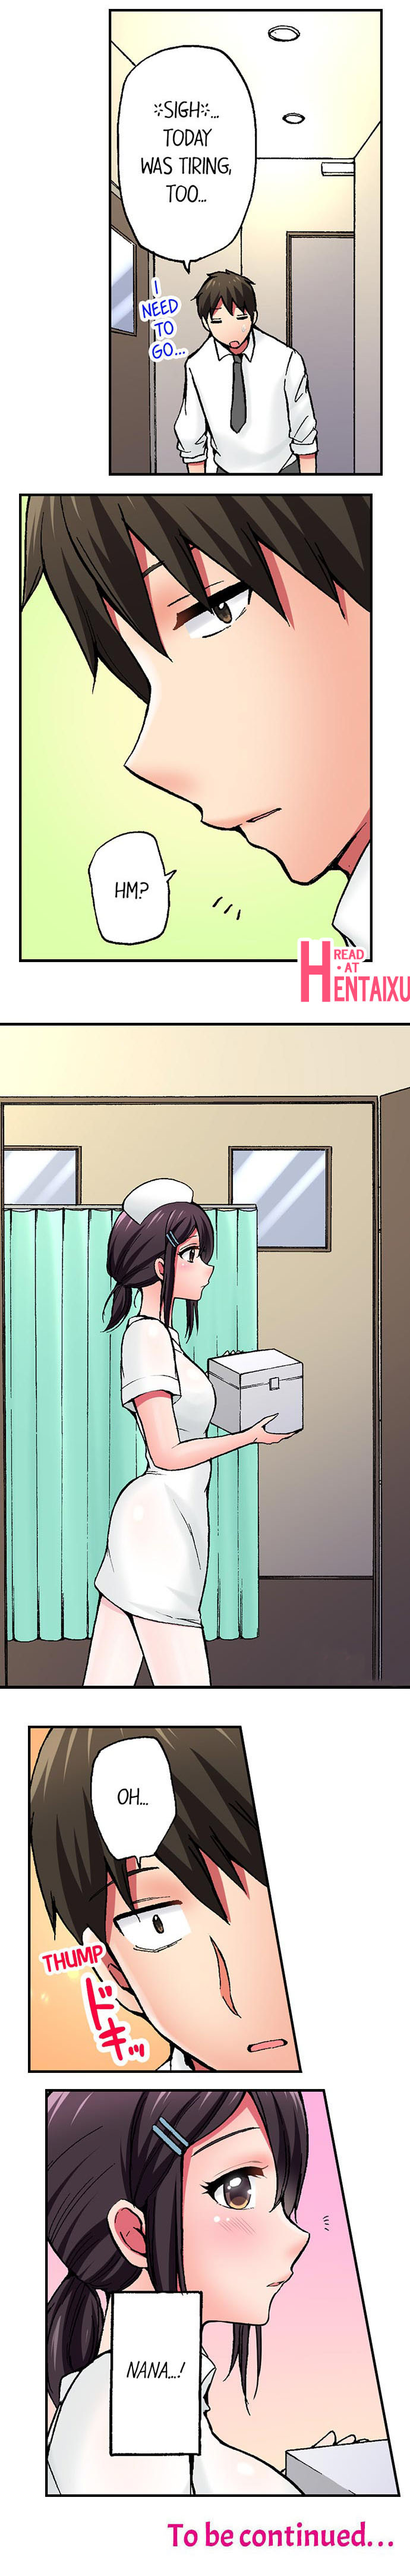 [Yukikuni] Pranking the Working Nurse Ch.18/18 [Completed] [English] [Hentai Universe]